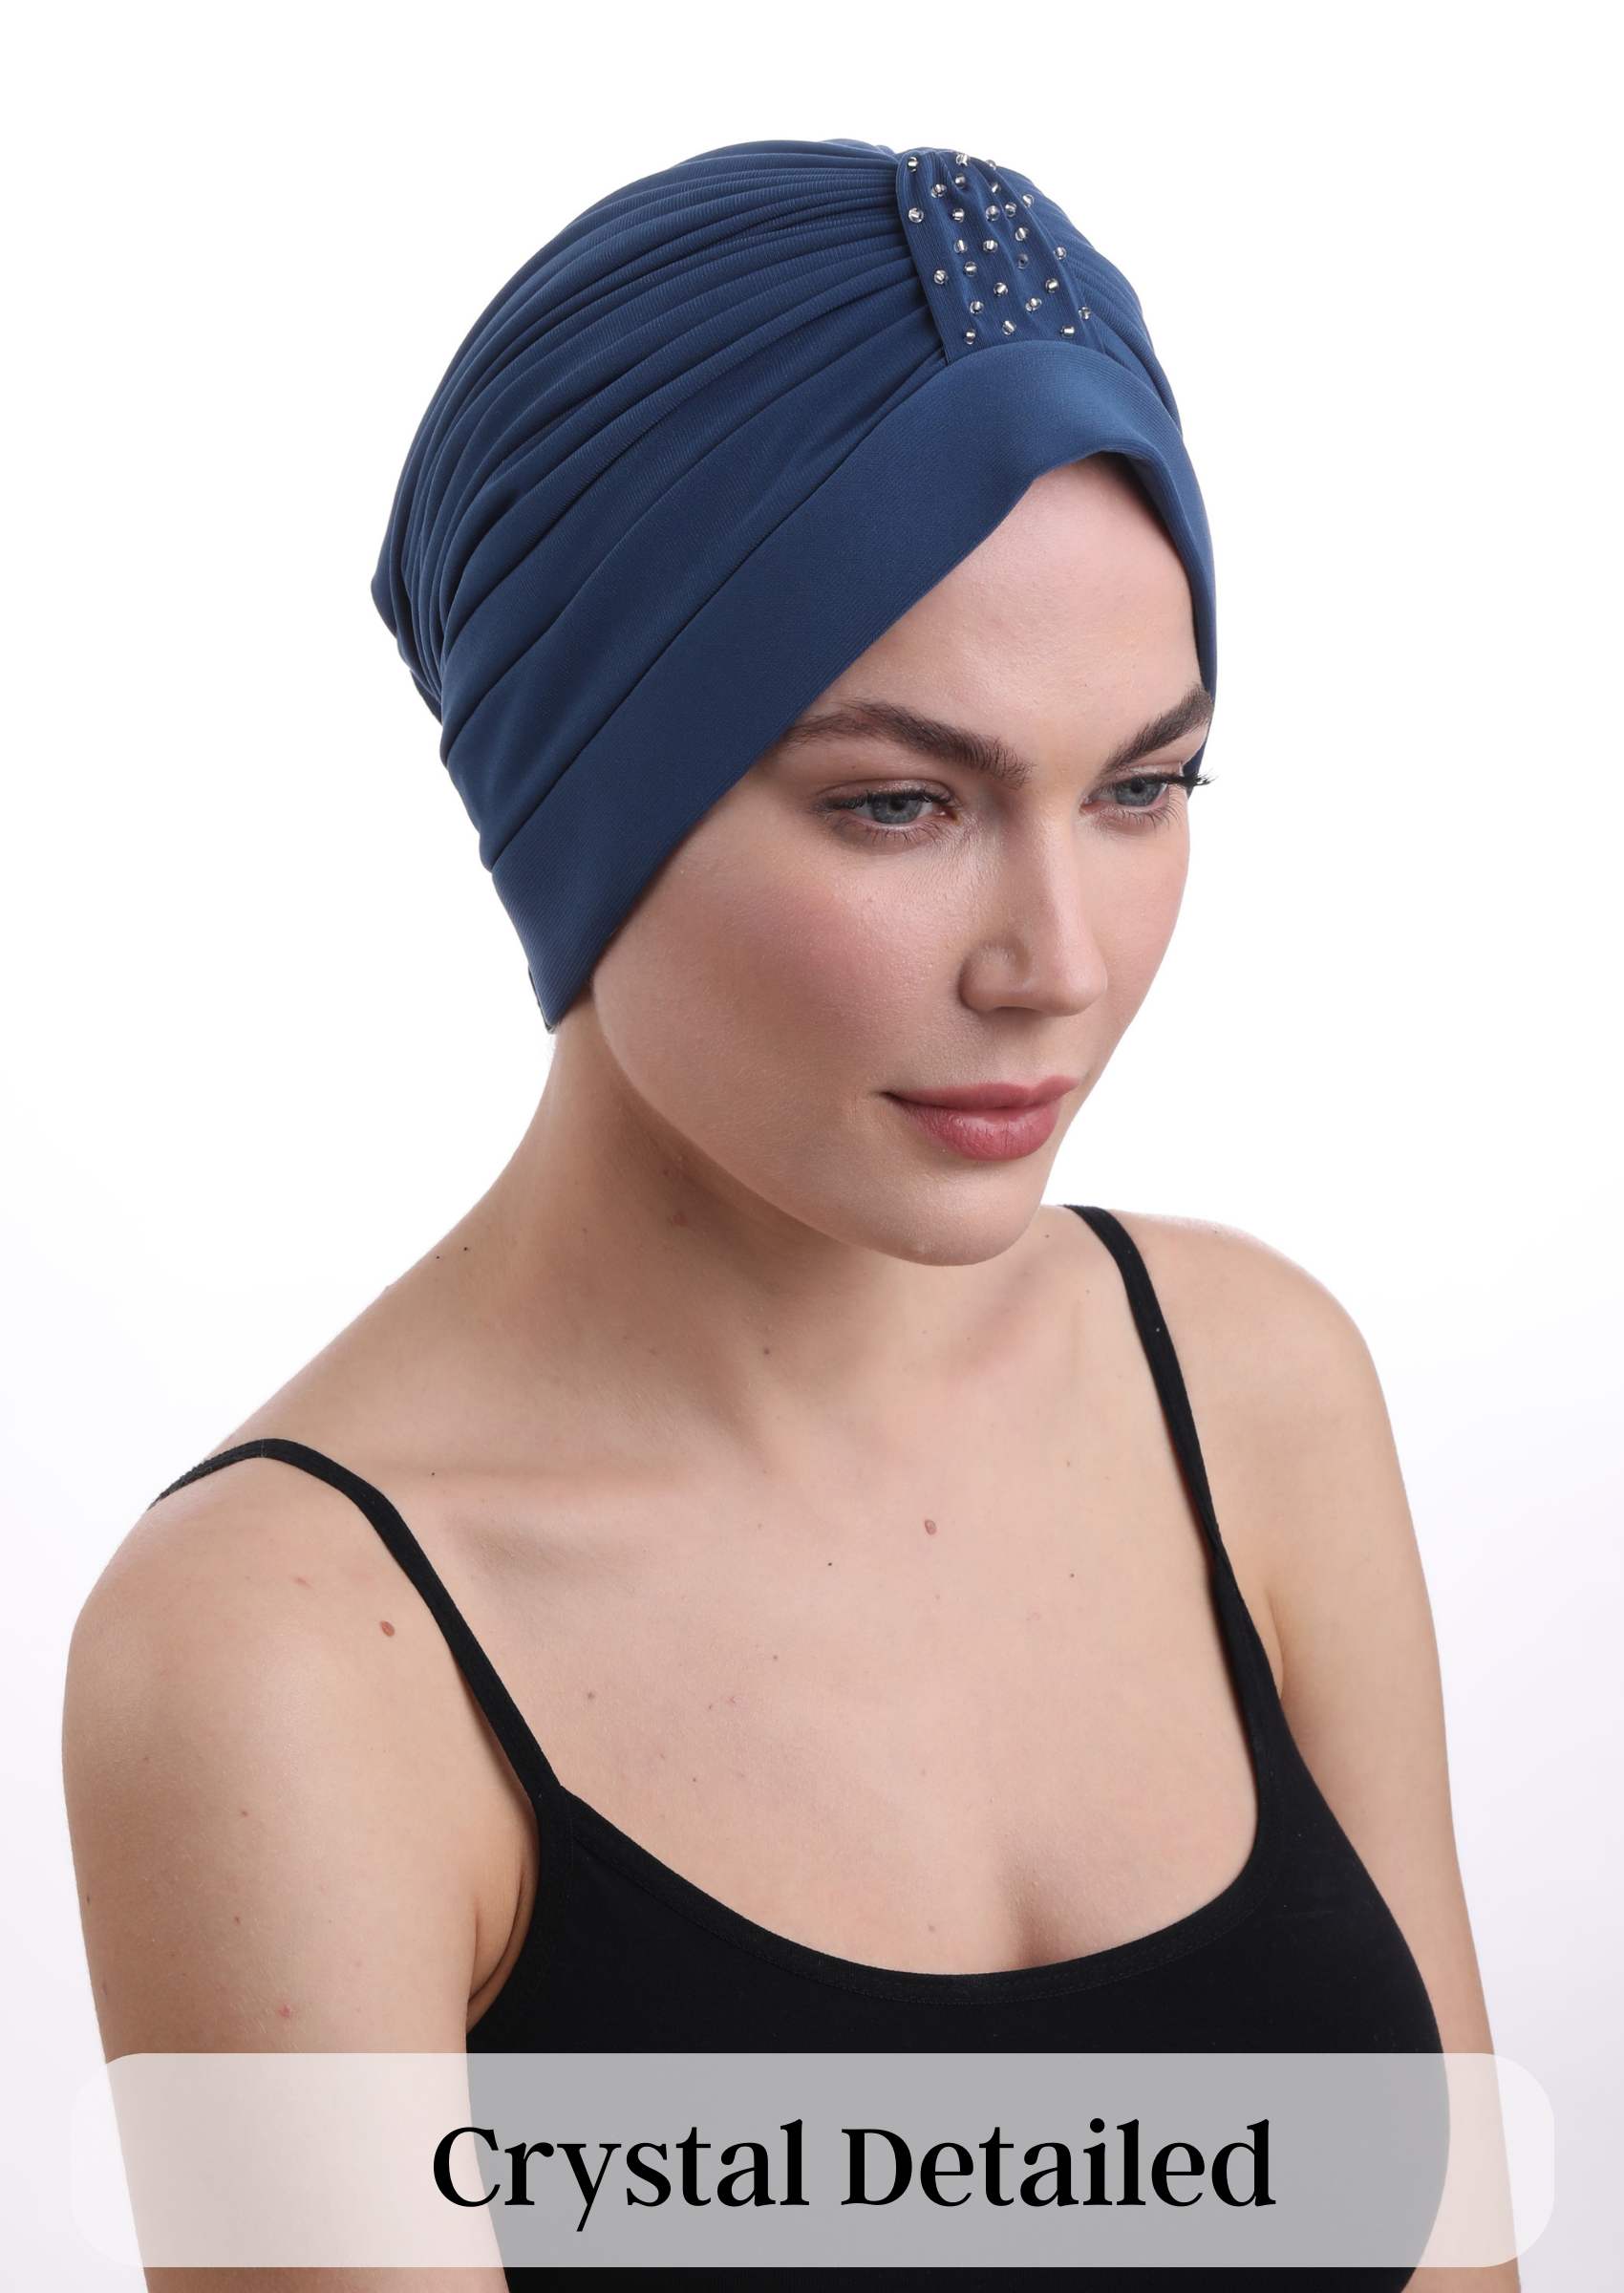 wofedyo Hats For Men Women Braid Turban Hats Cancer Cap Hair Bonnet Head  Scarf Wrap Coer Hat Baseball CapRed